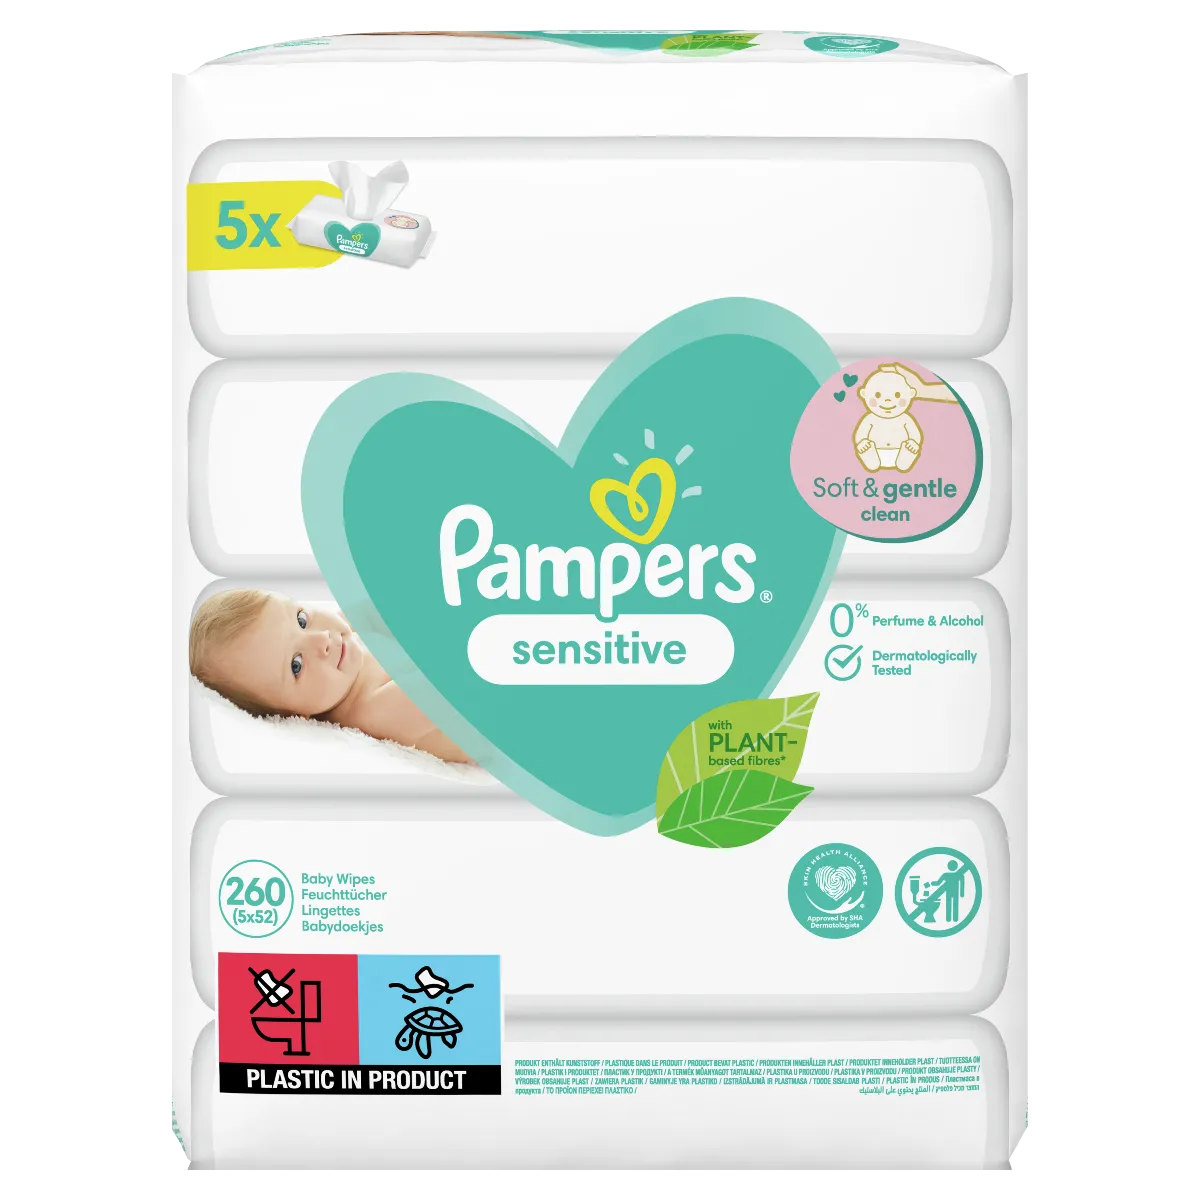 Pampers Wipes 260ks (5x52) Sensitive 1×260ks, vlhčené obrúsky pre citlivú detskú pokožku